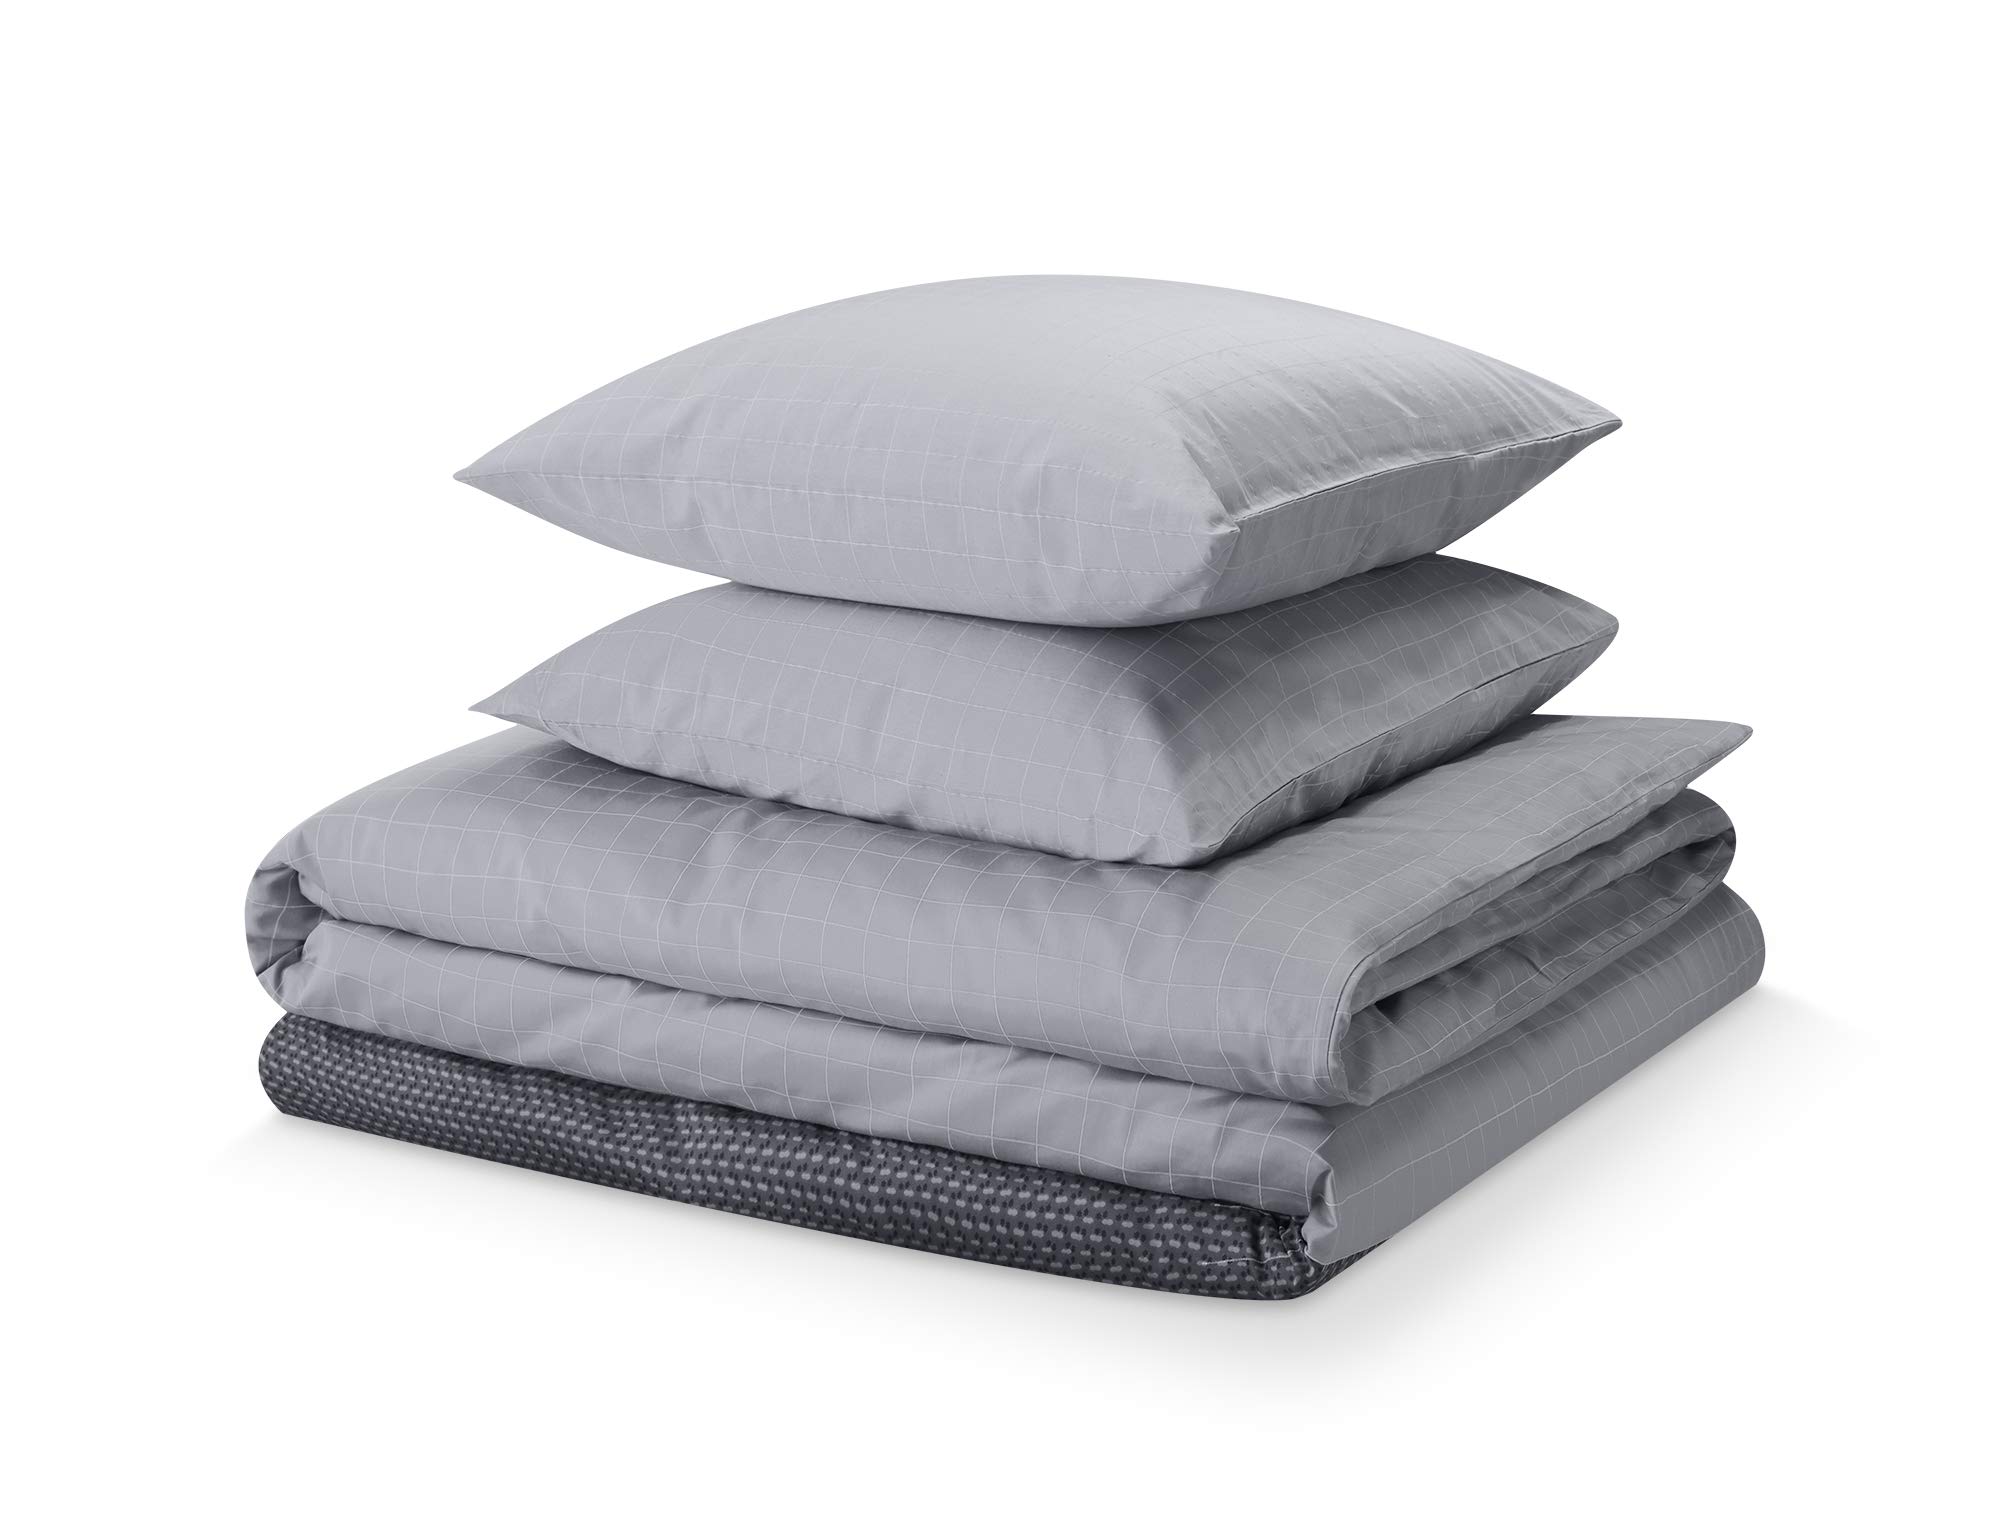 Mua Calvin Klein Home Printed Queen Comforter Set of 3 Pieces - 1 Comforter  and 2 Sham Covers, 100% Cotton 300 Tc (Dark Grey) trên Amazon Mỹ chính hãng  2023 | Fado